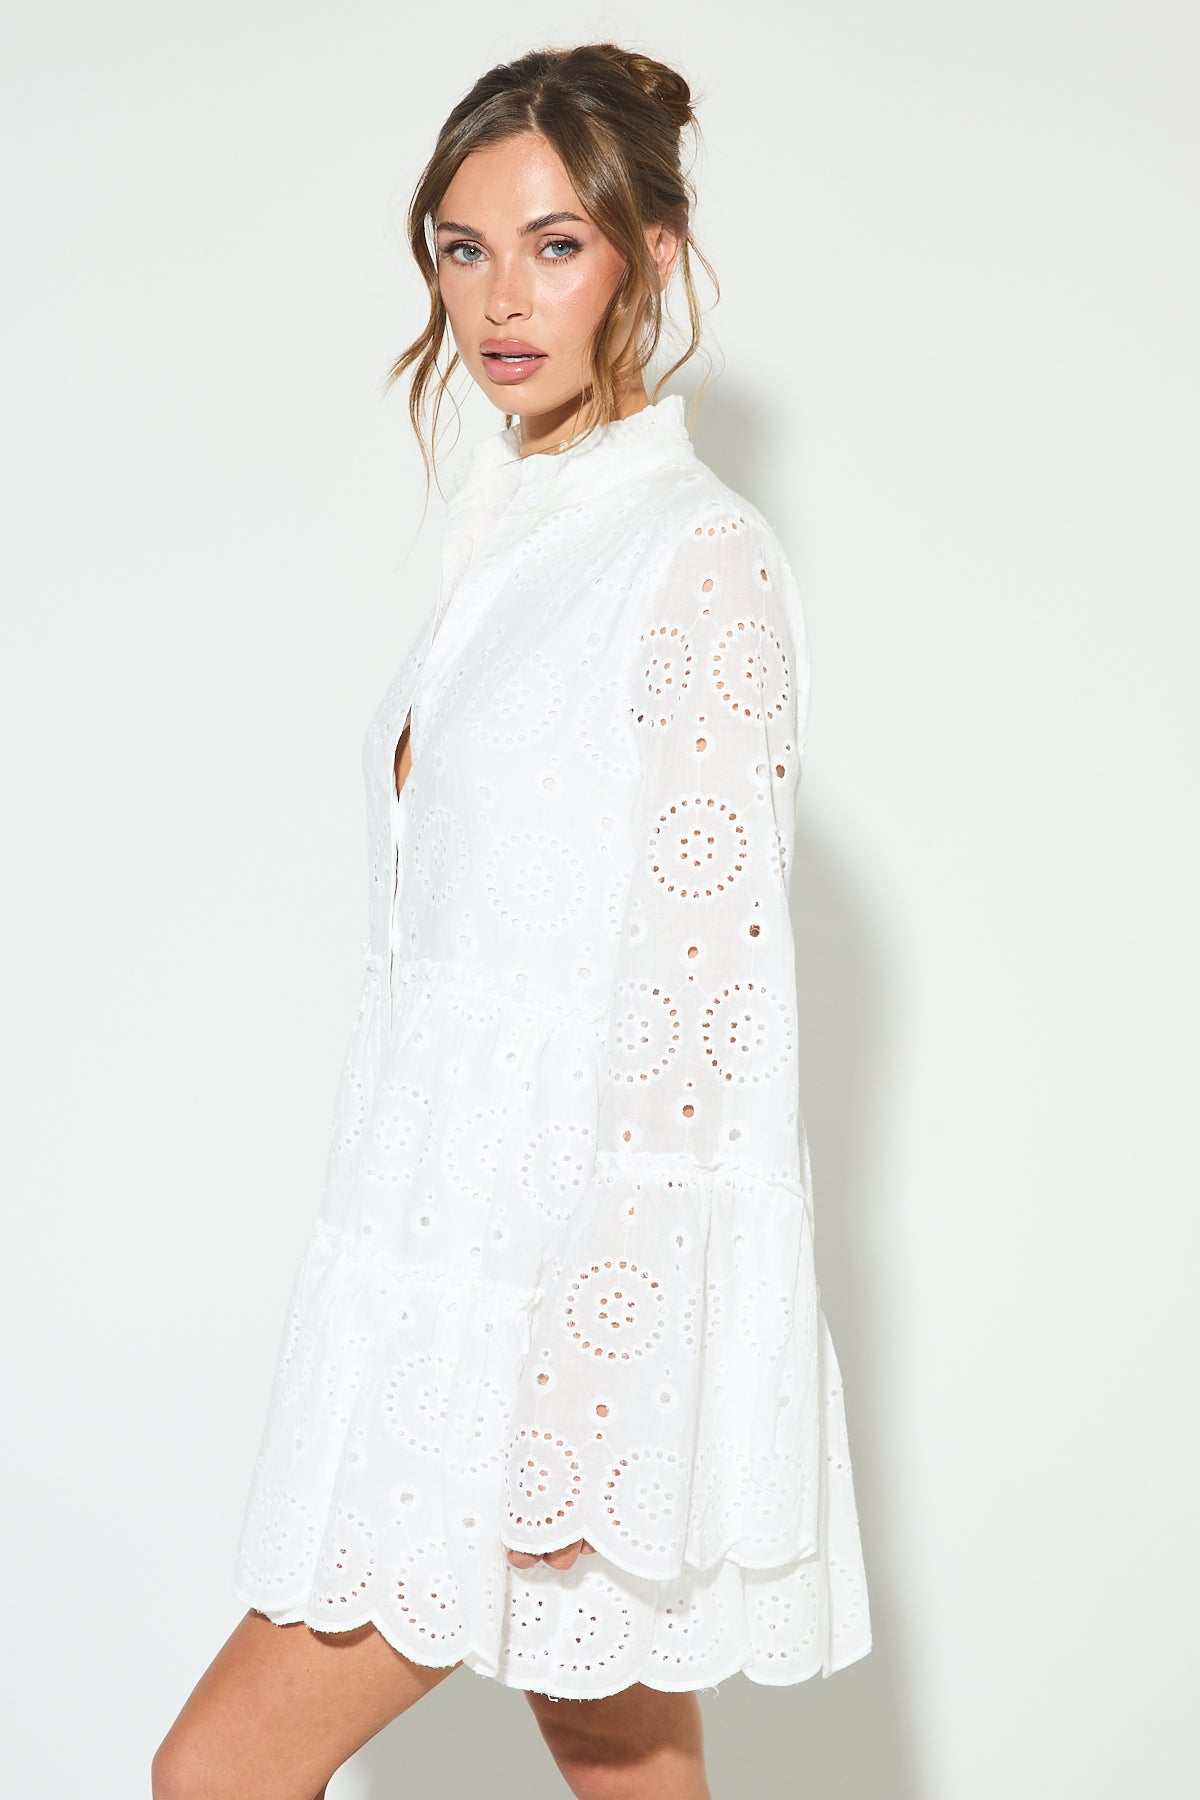 SOFIA White Embroidered Dress